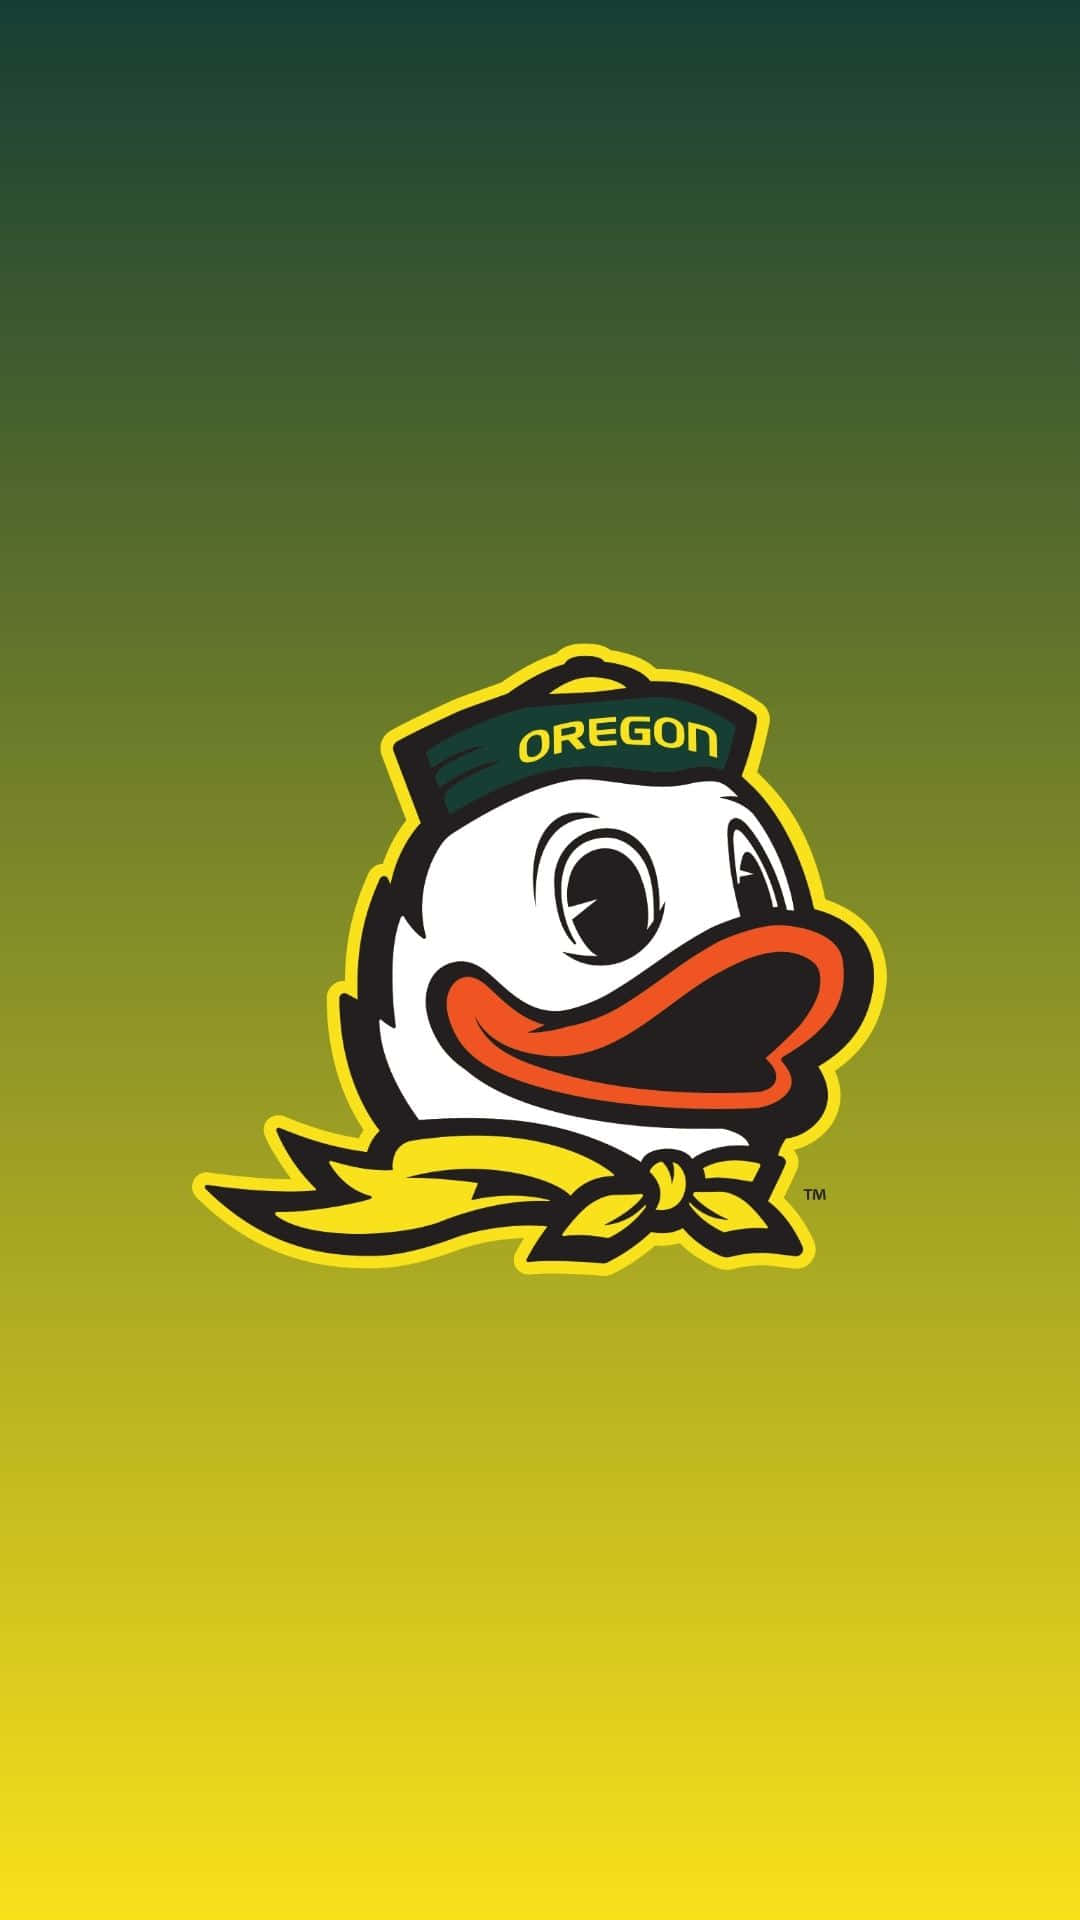 Oregon Ducks Football Team Logo Background